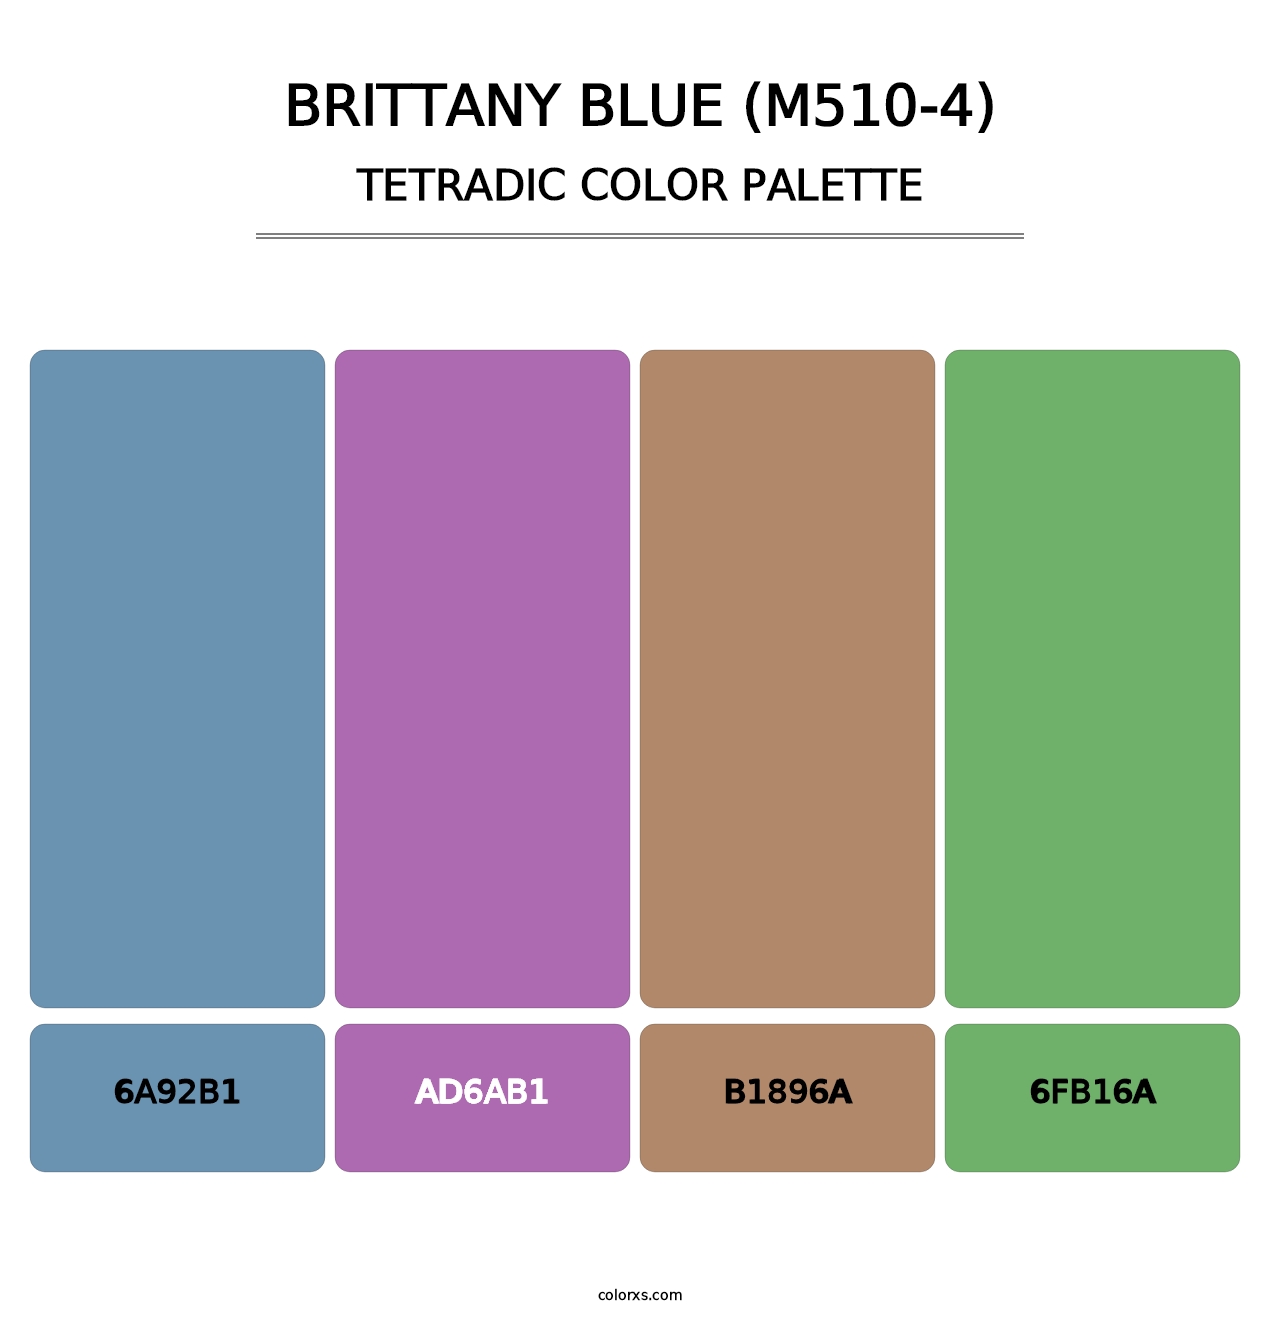 Brittany Blue (M510-4) - Tetradic Color Palette